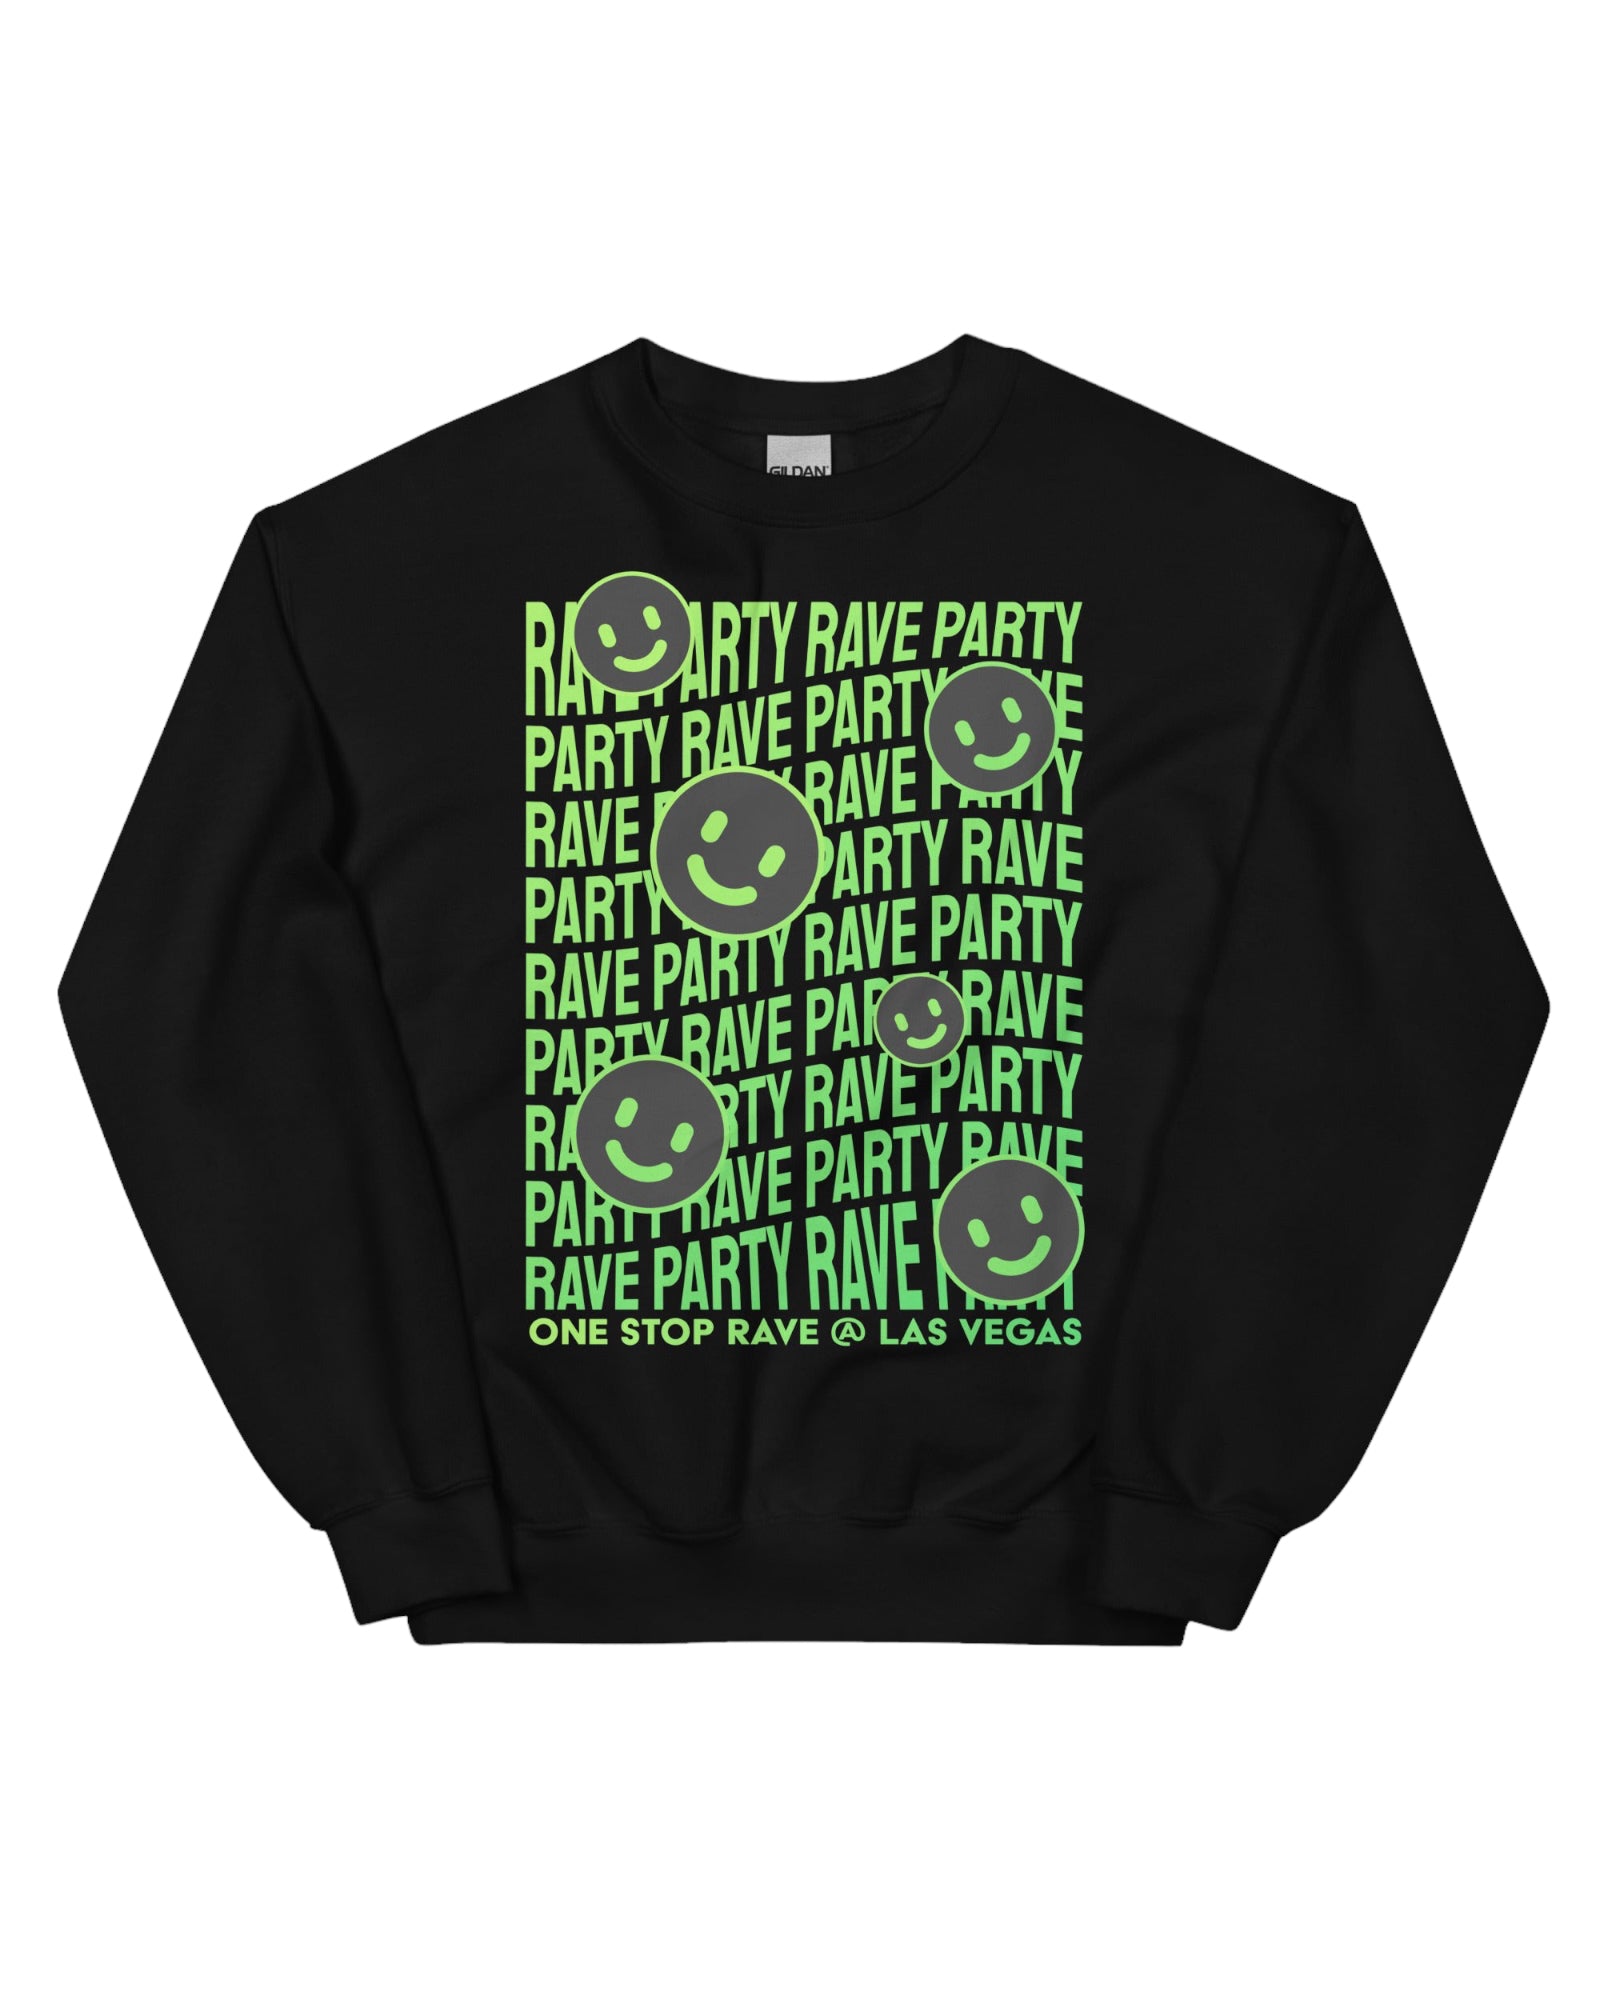 Rave Party Sweatshirt